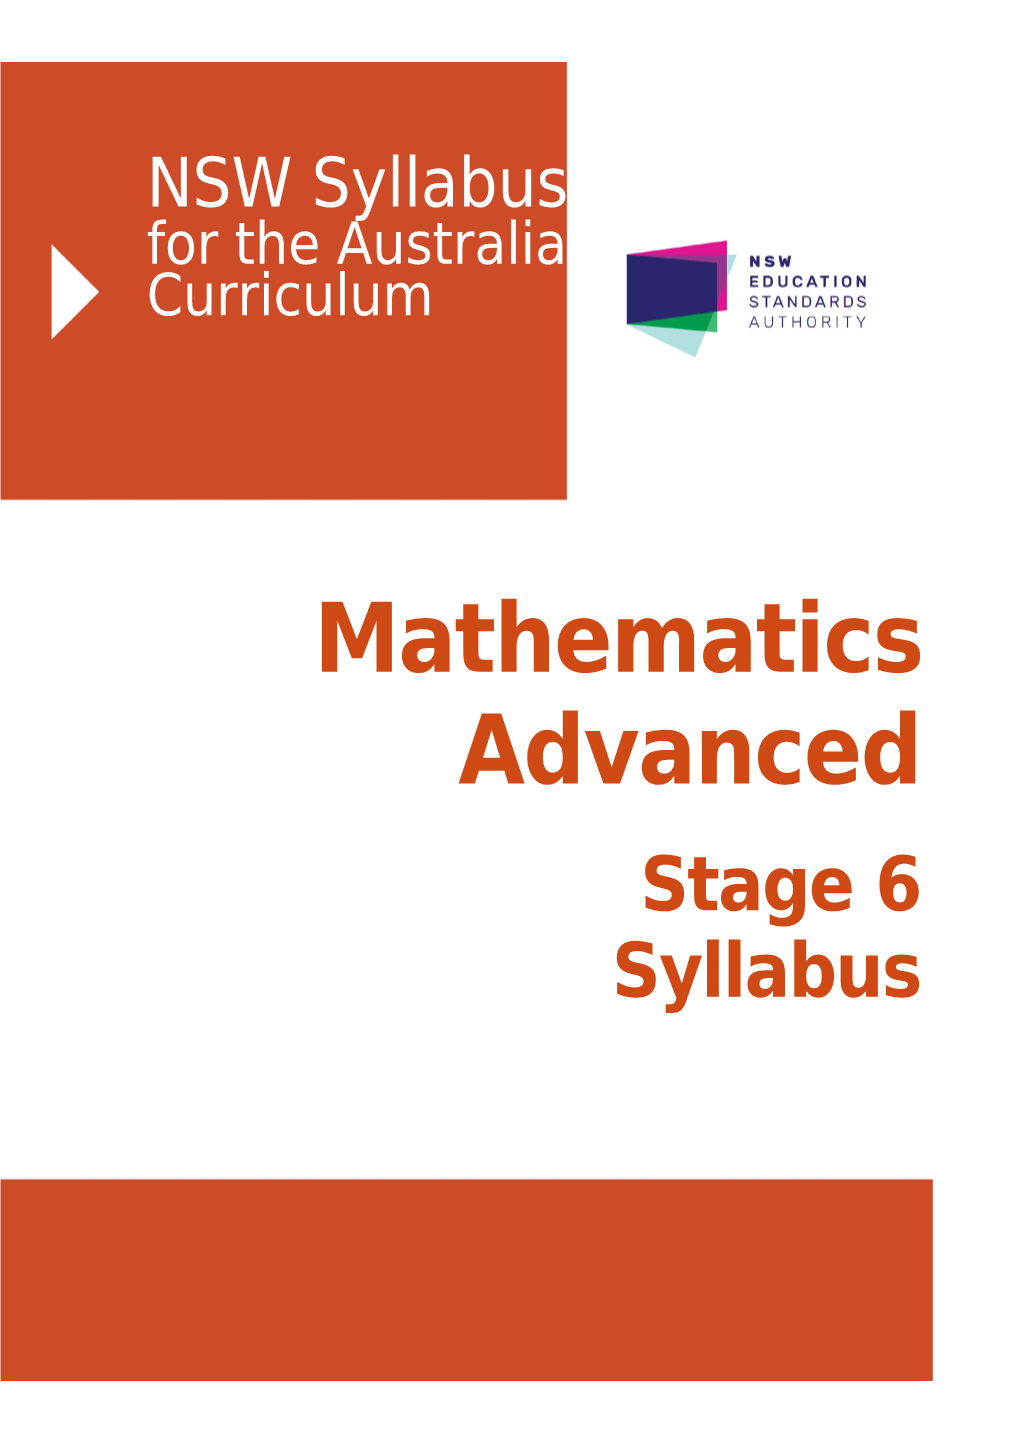 Mathematics Advanced Stage 6 Syllabus 2017